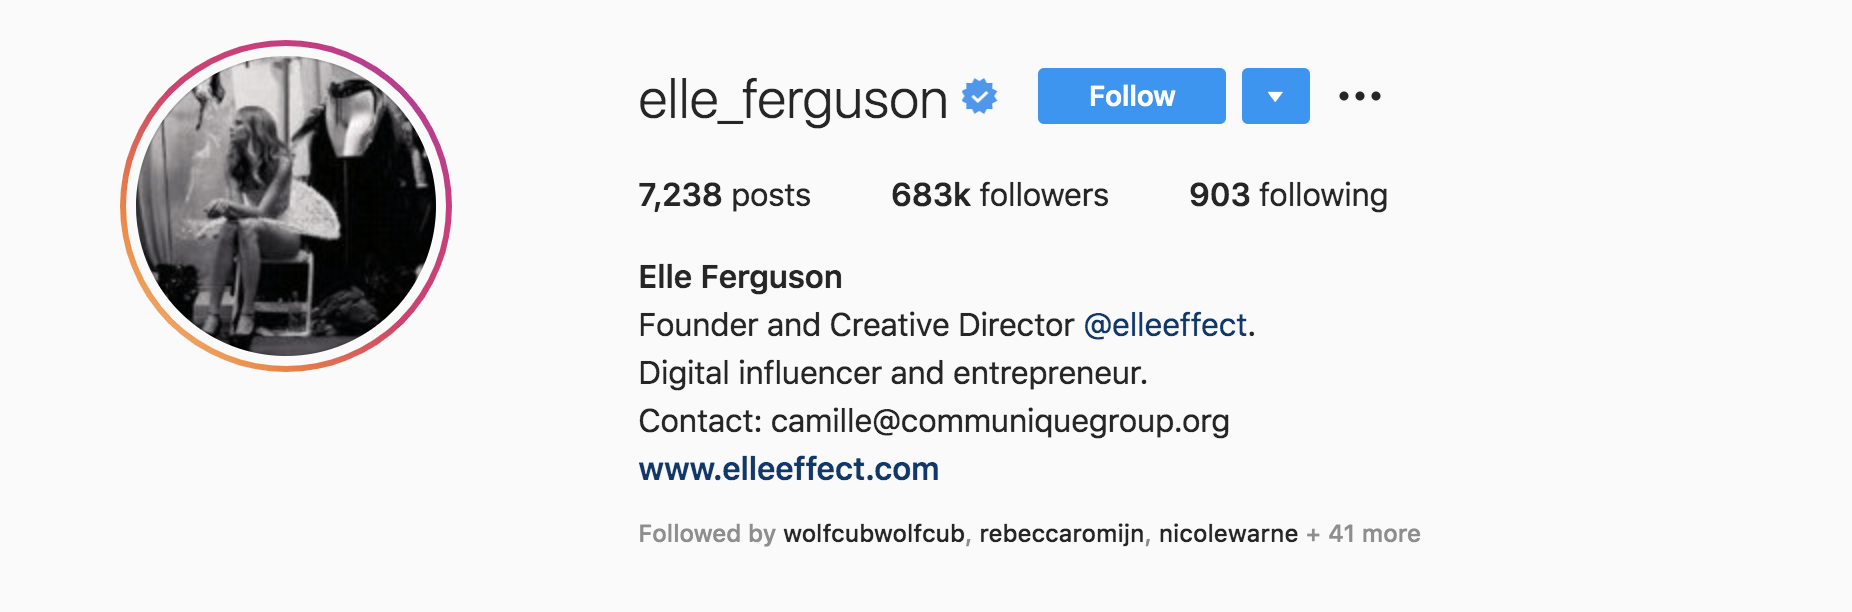 Top Fashion Influencers - Elle Ferguson